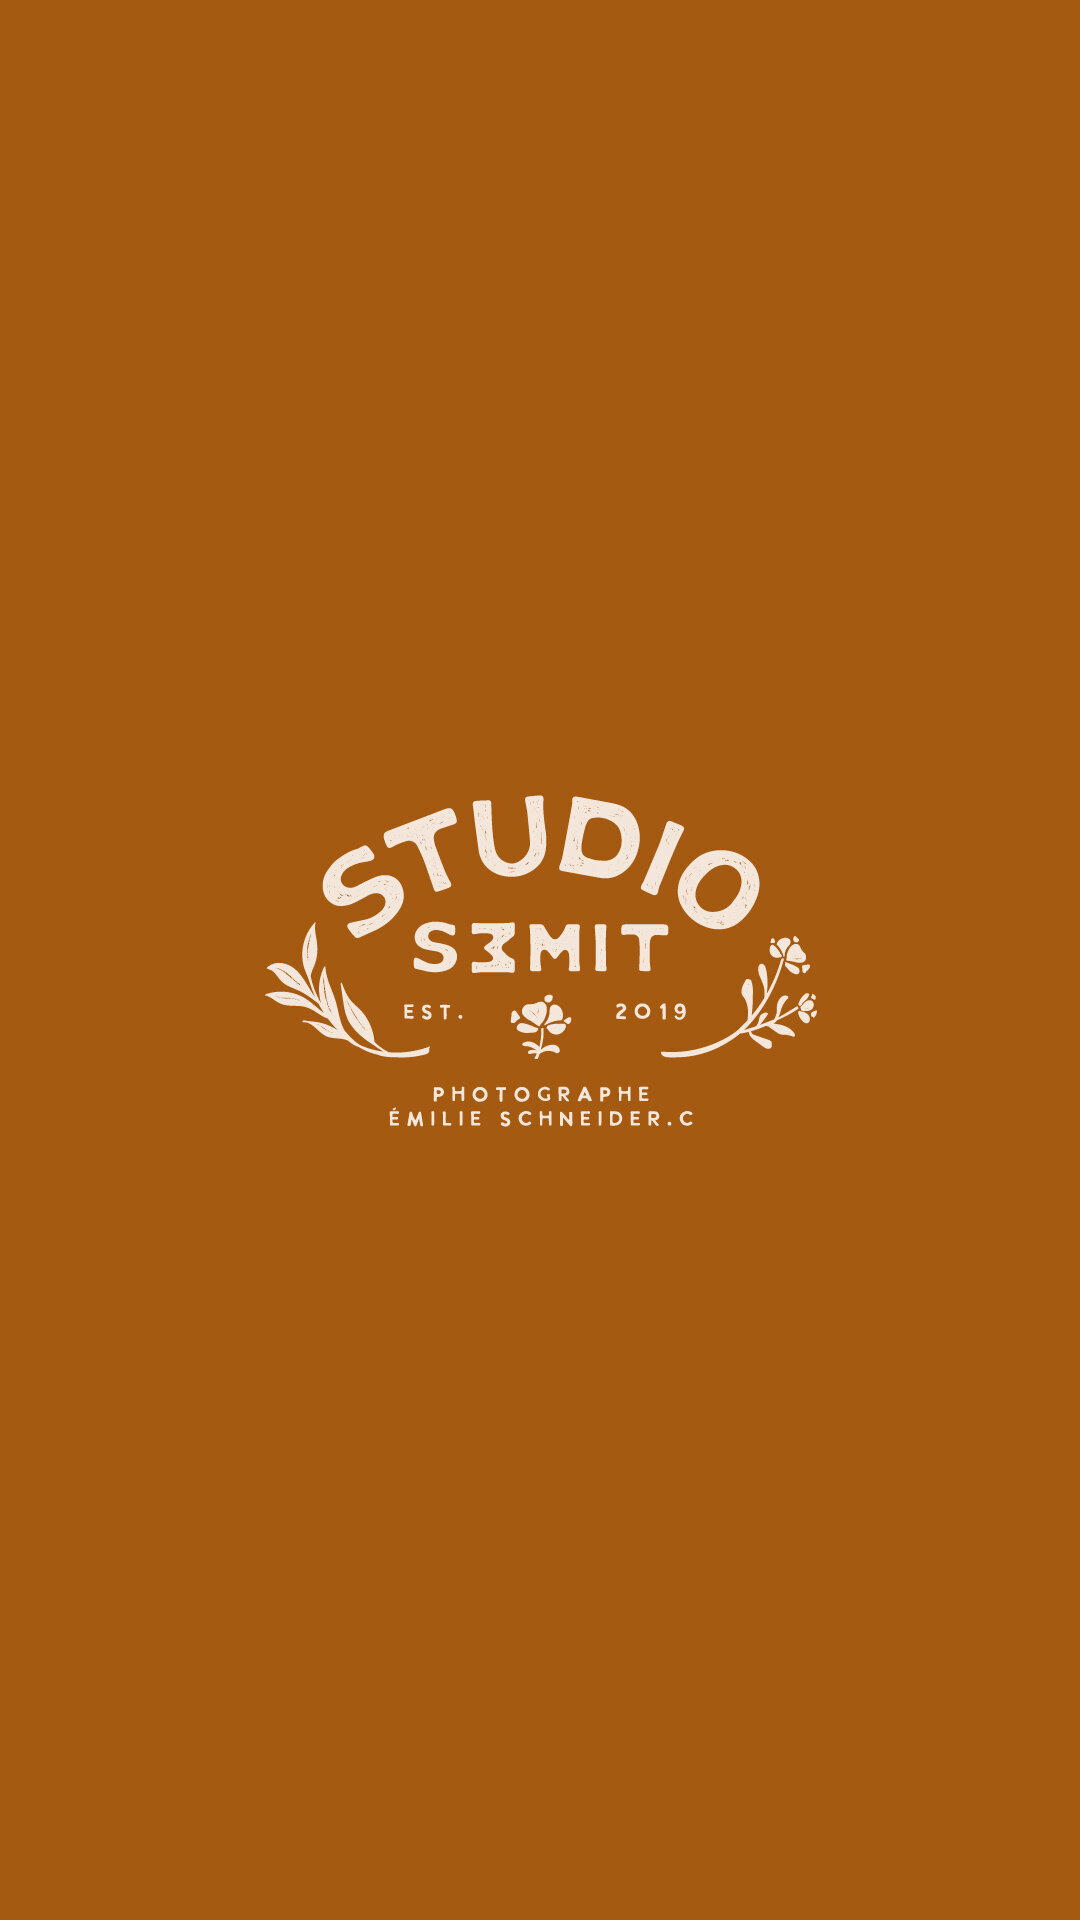 StudioSemit-1